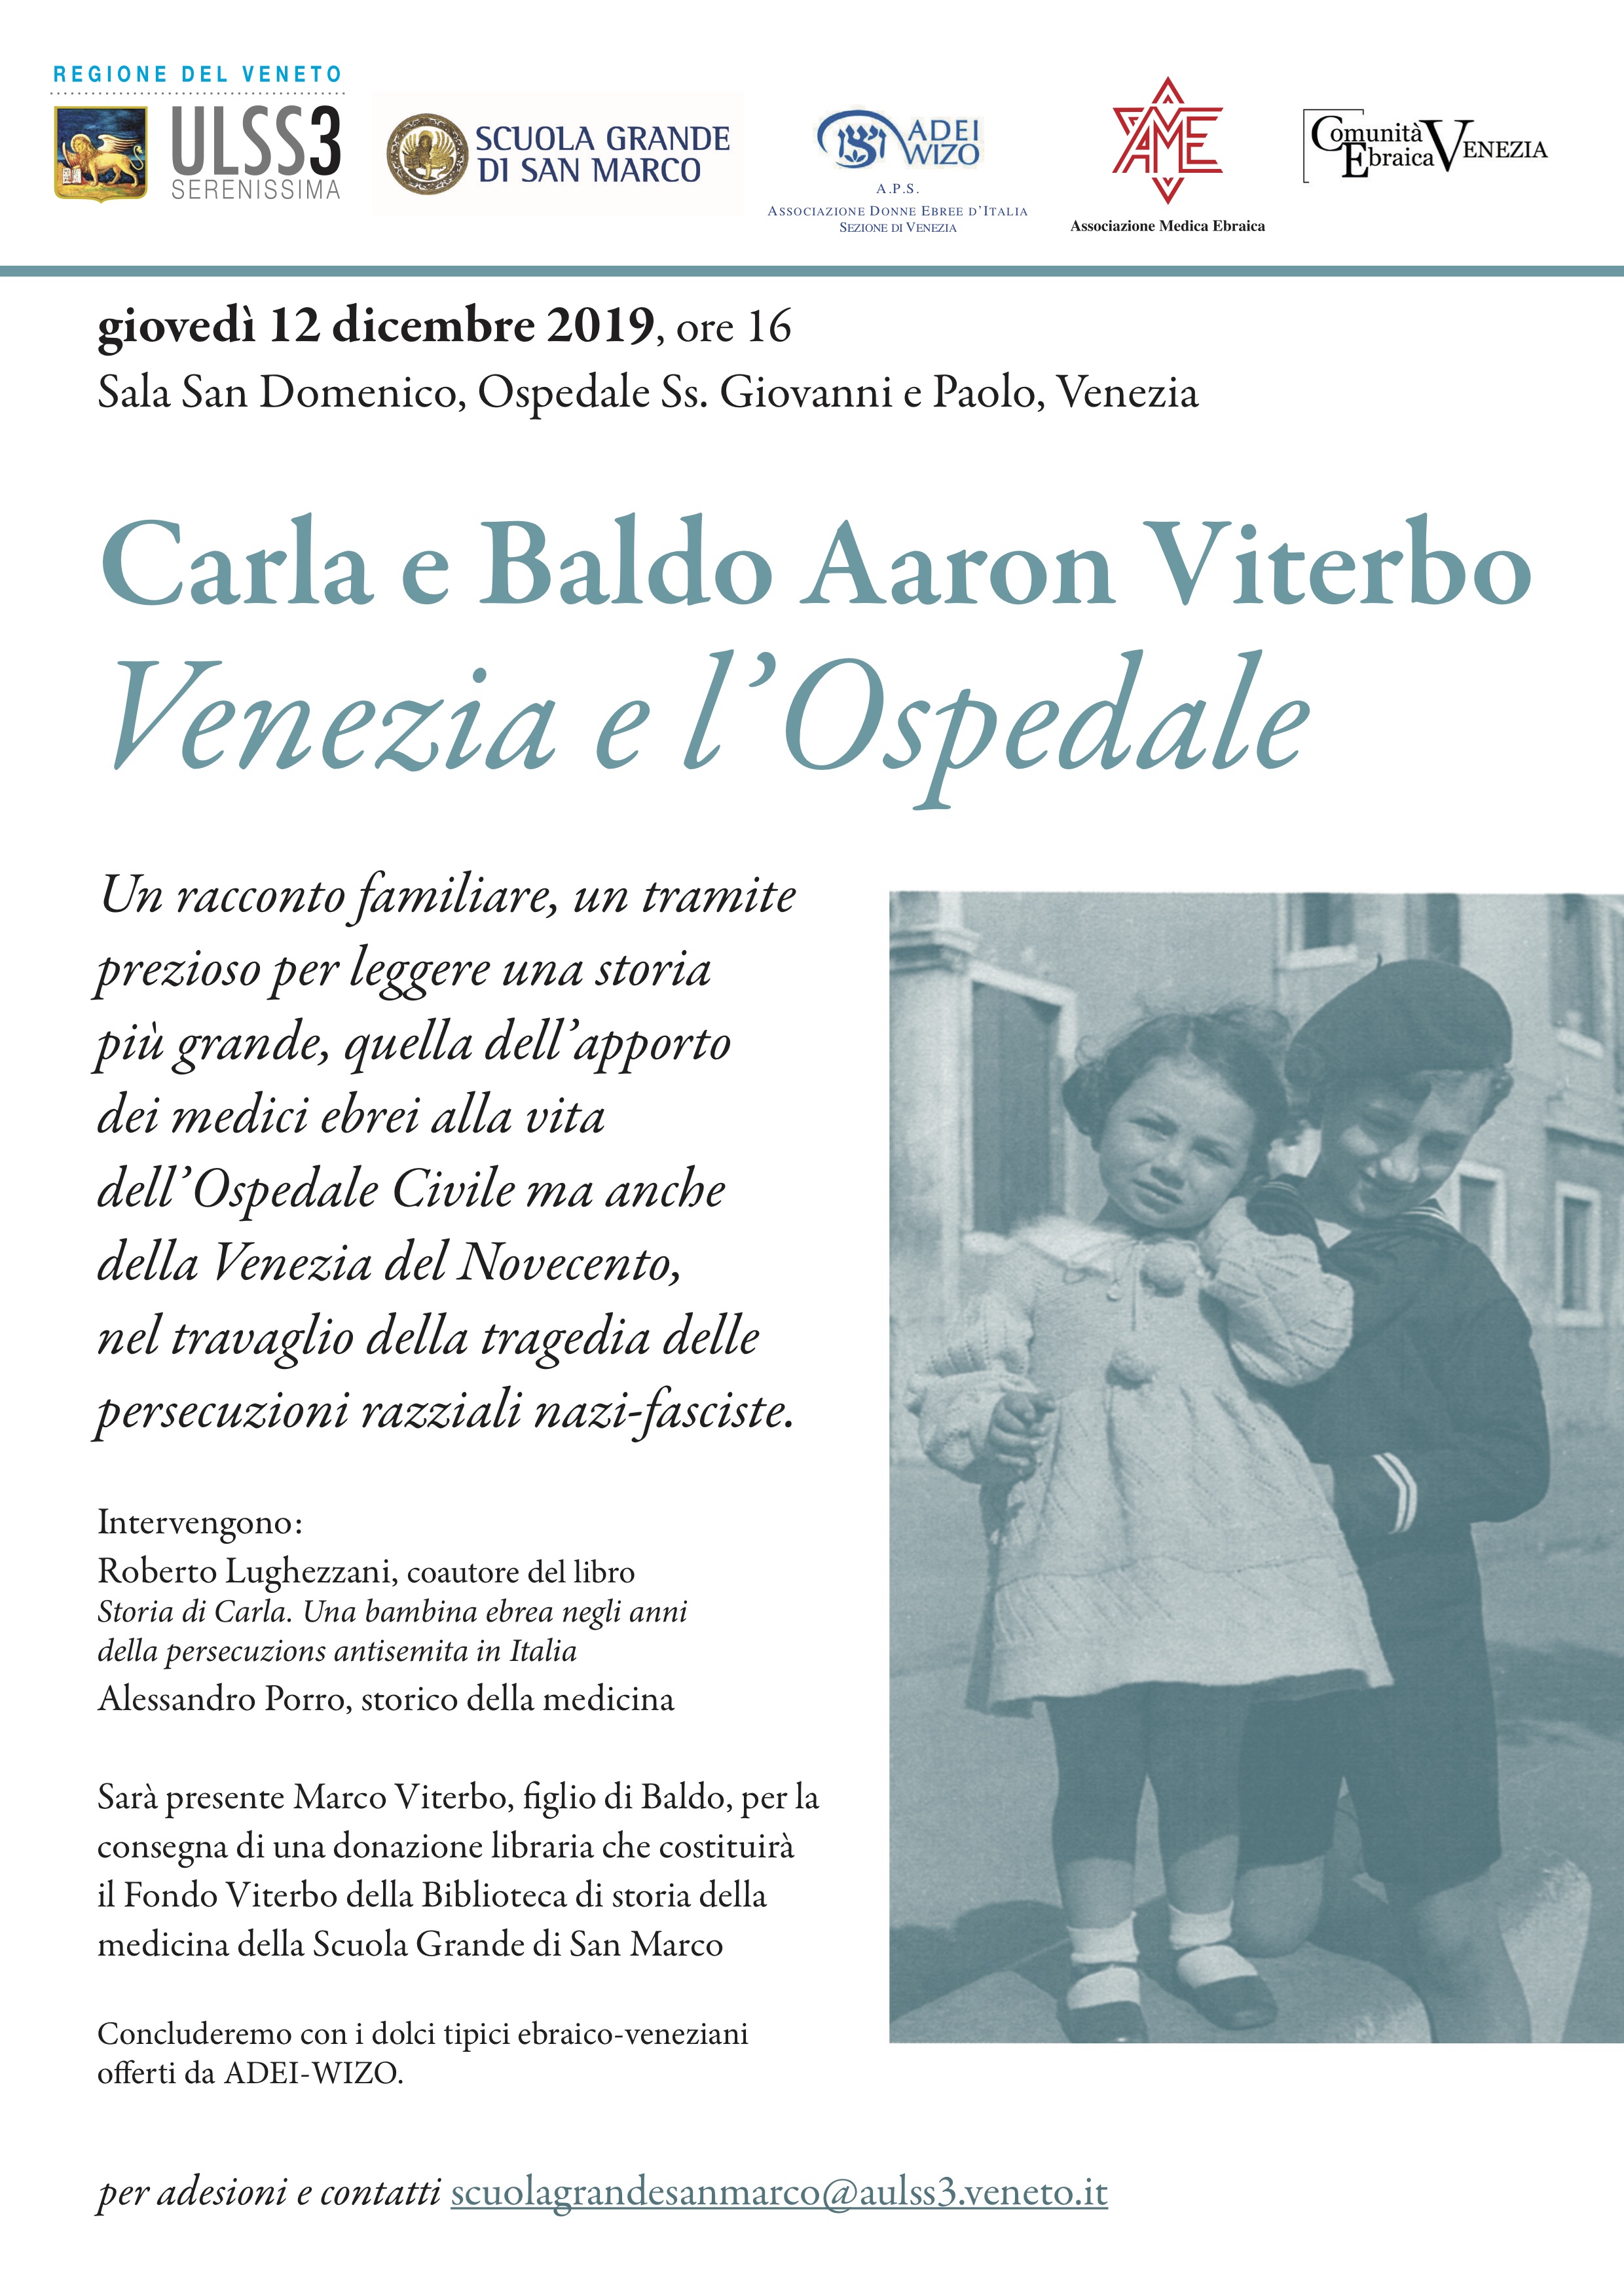 Carla e Baldo Aaron Viterbo - Venezia e l’Ospedale